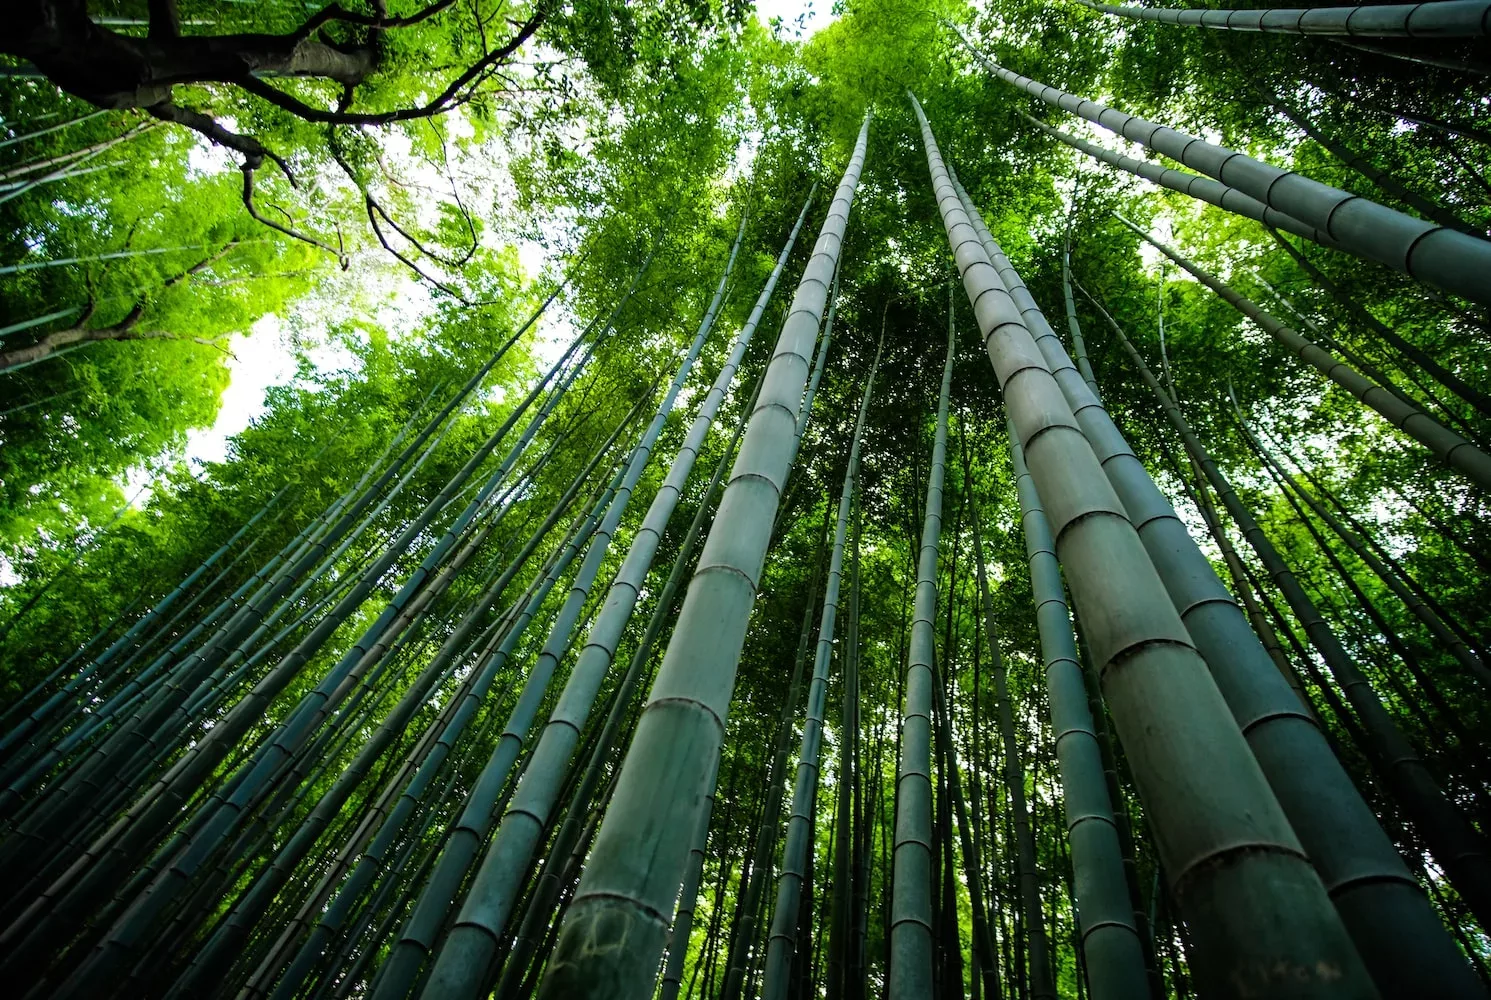 bamboo trees scenery, medicinal uses of bamboo